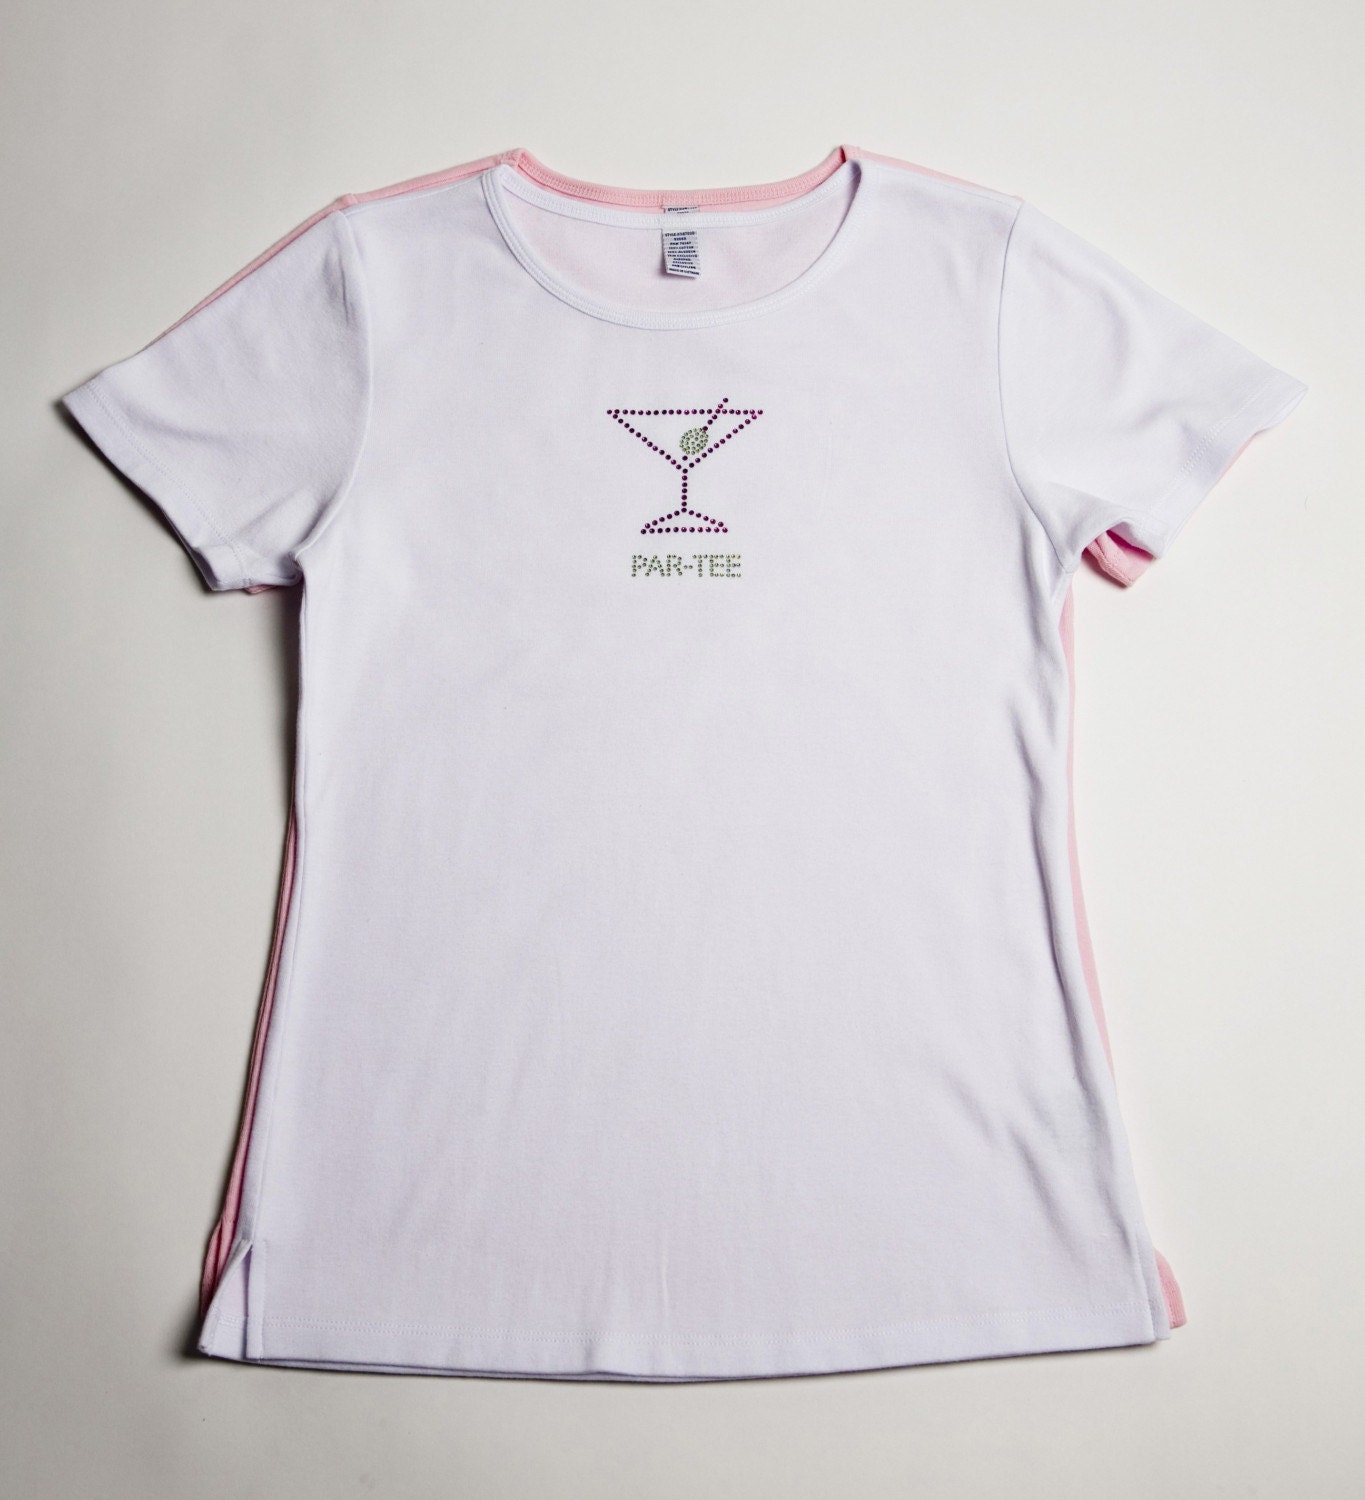 Par Tee Golf-Crystal T-Shirt 4 Colors Available | Etsy